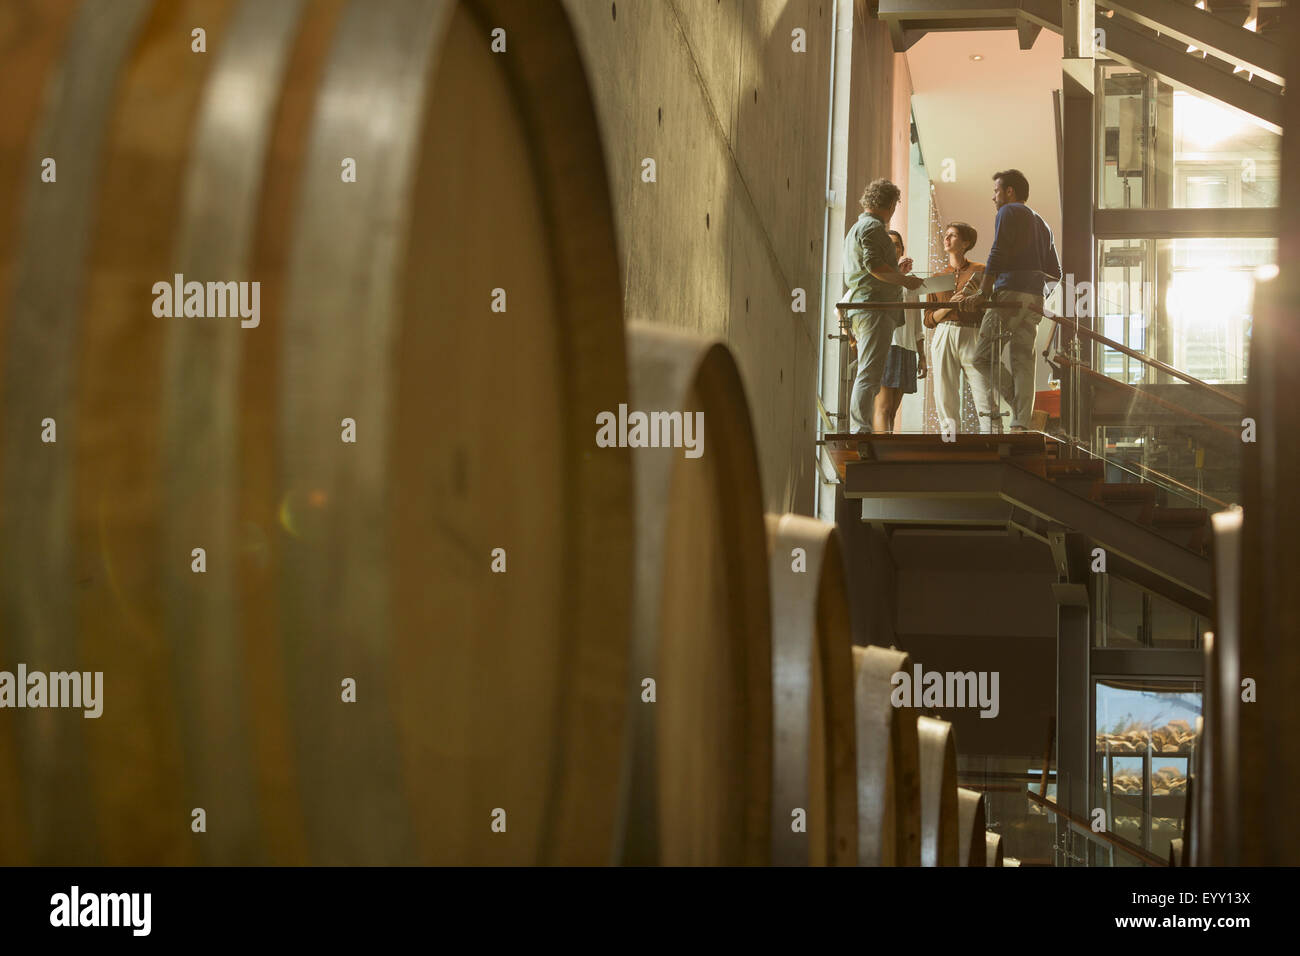 Vintners talking on platform in winery cellar Stock Photo